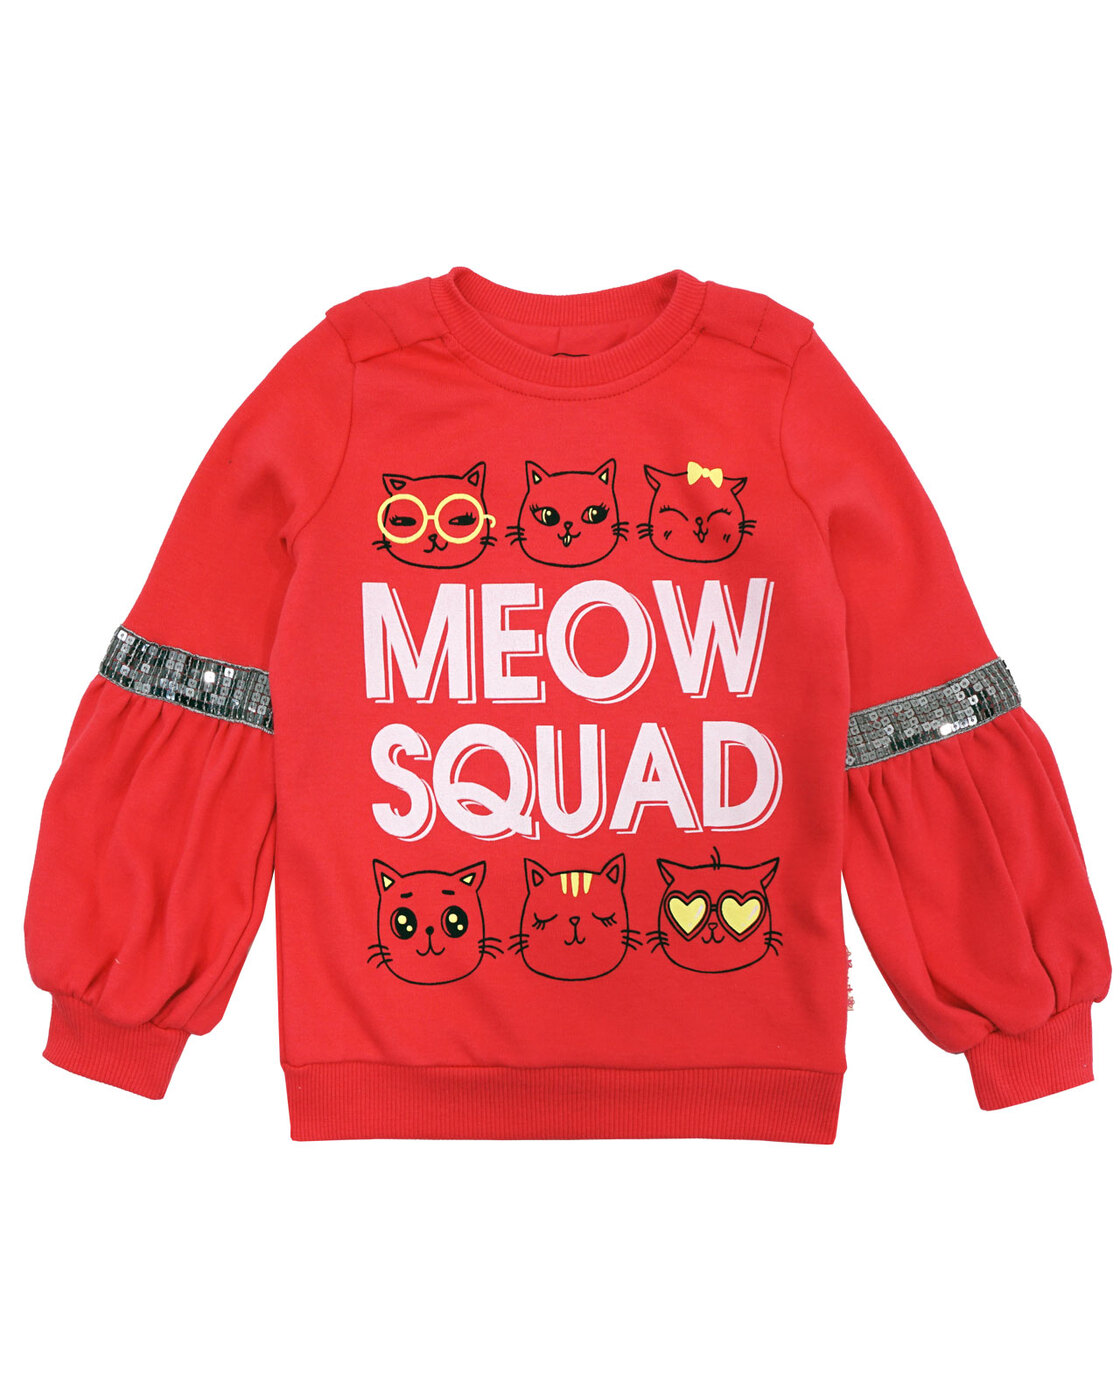 Meow Kids одежда. Толстовка Бонито 1147. Meow Squad. Meow Kids 24 коробка. Meow kids